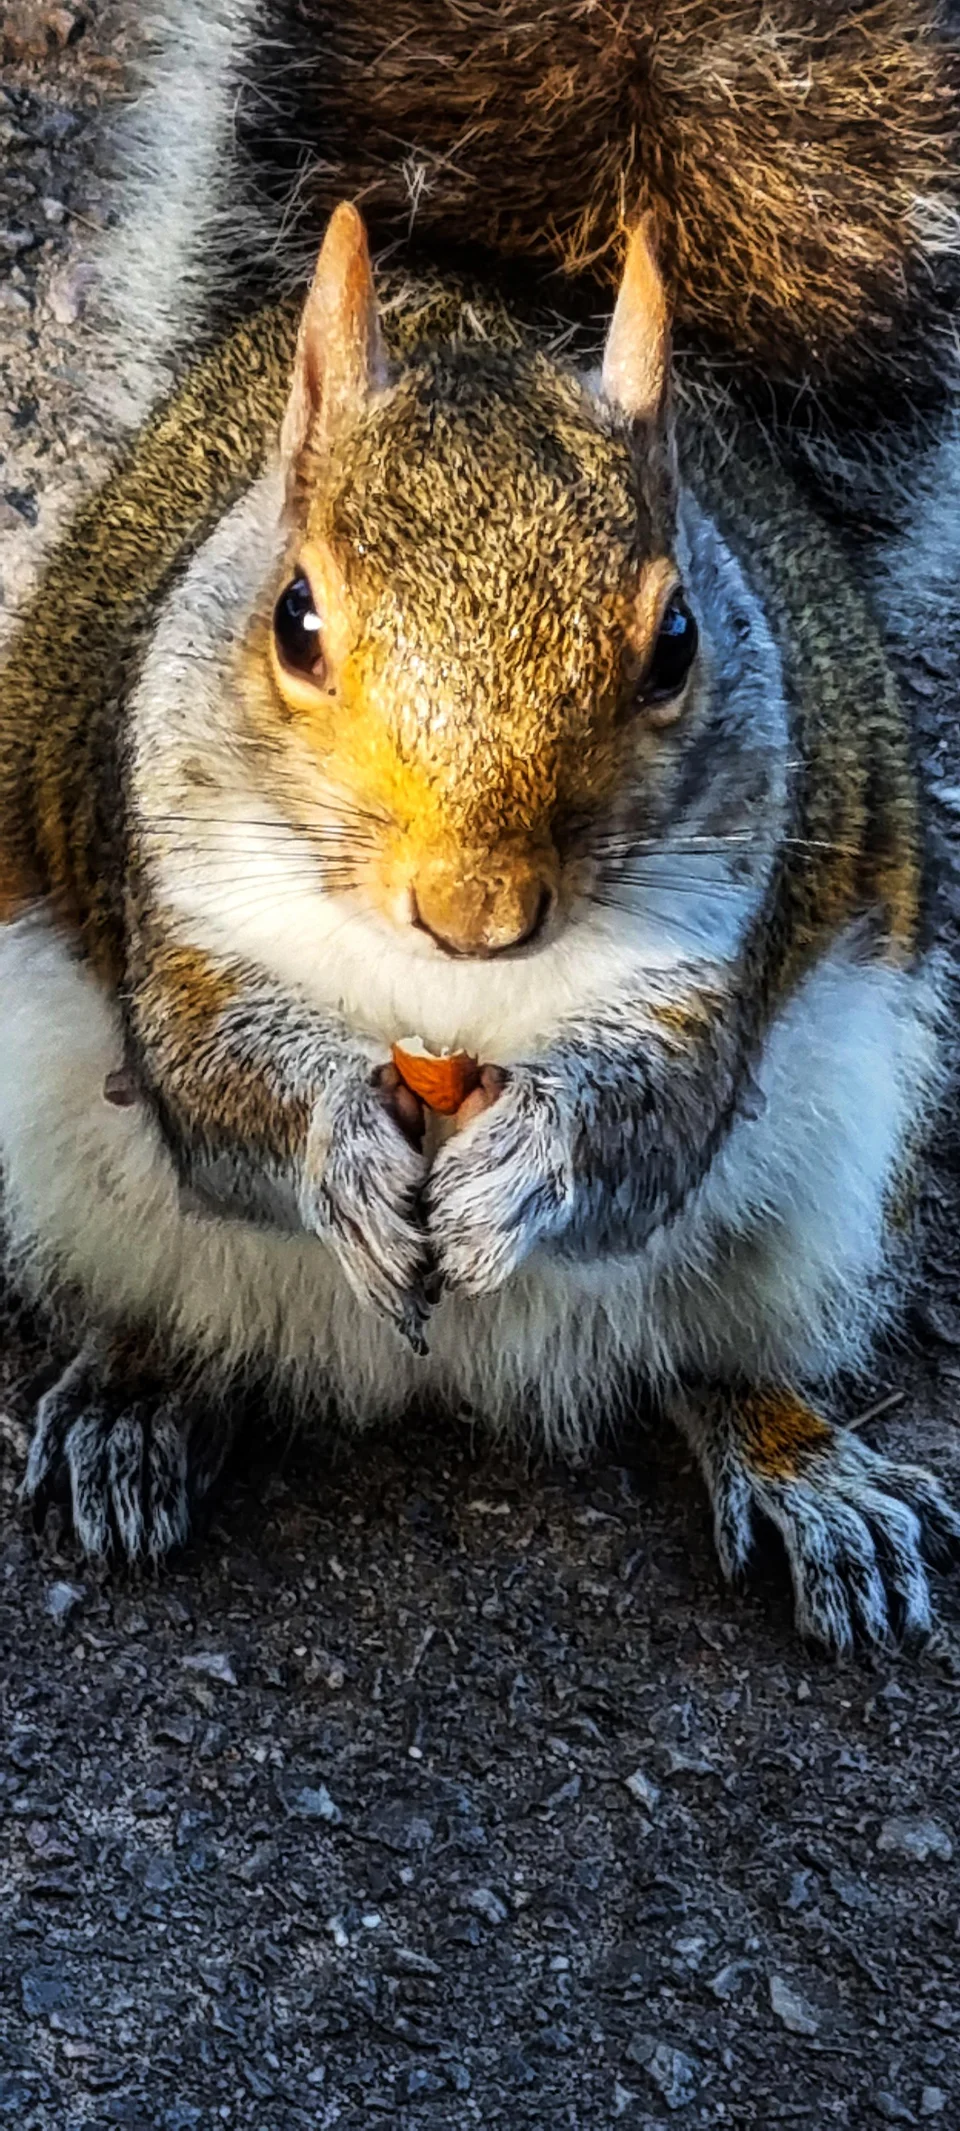 Squirrel having a munch